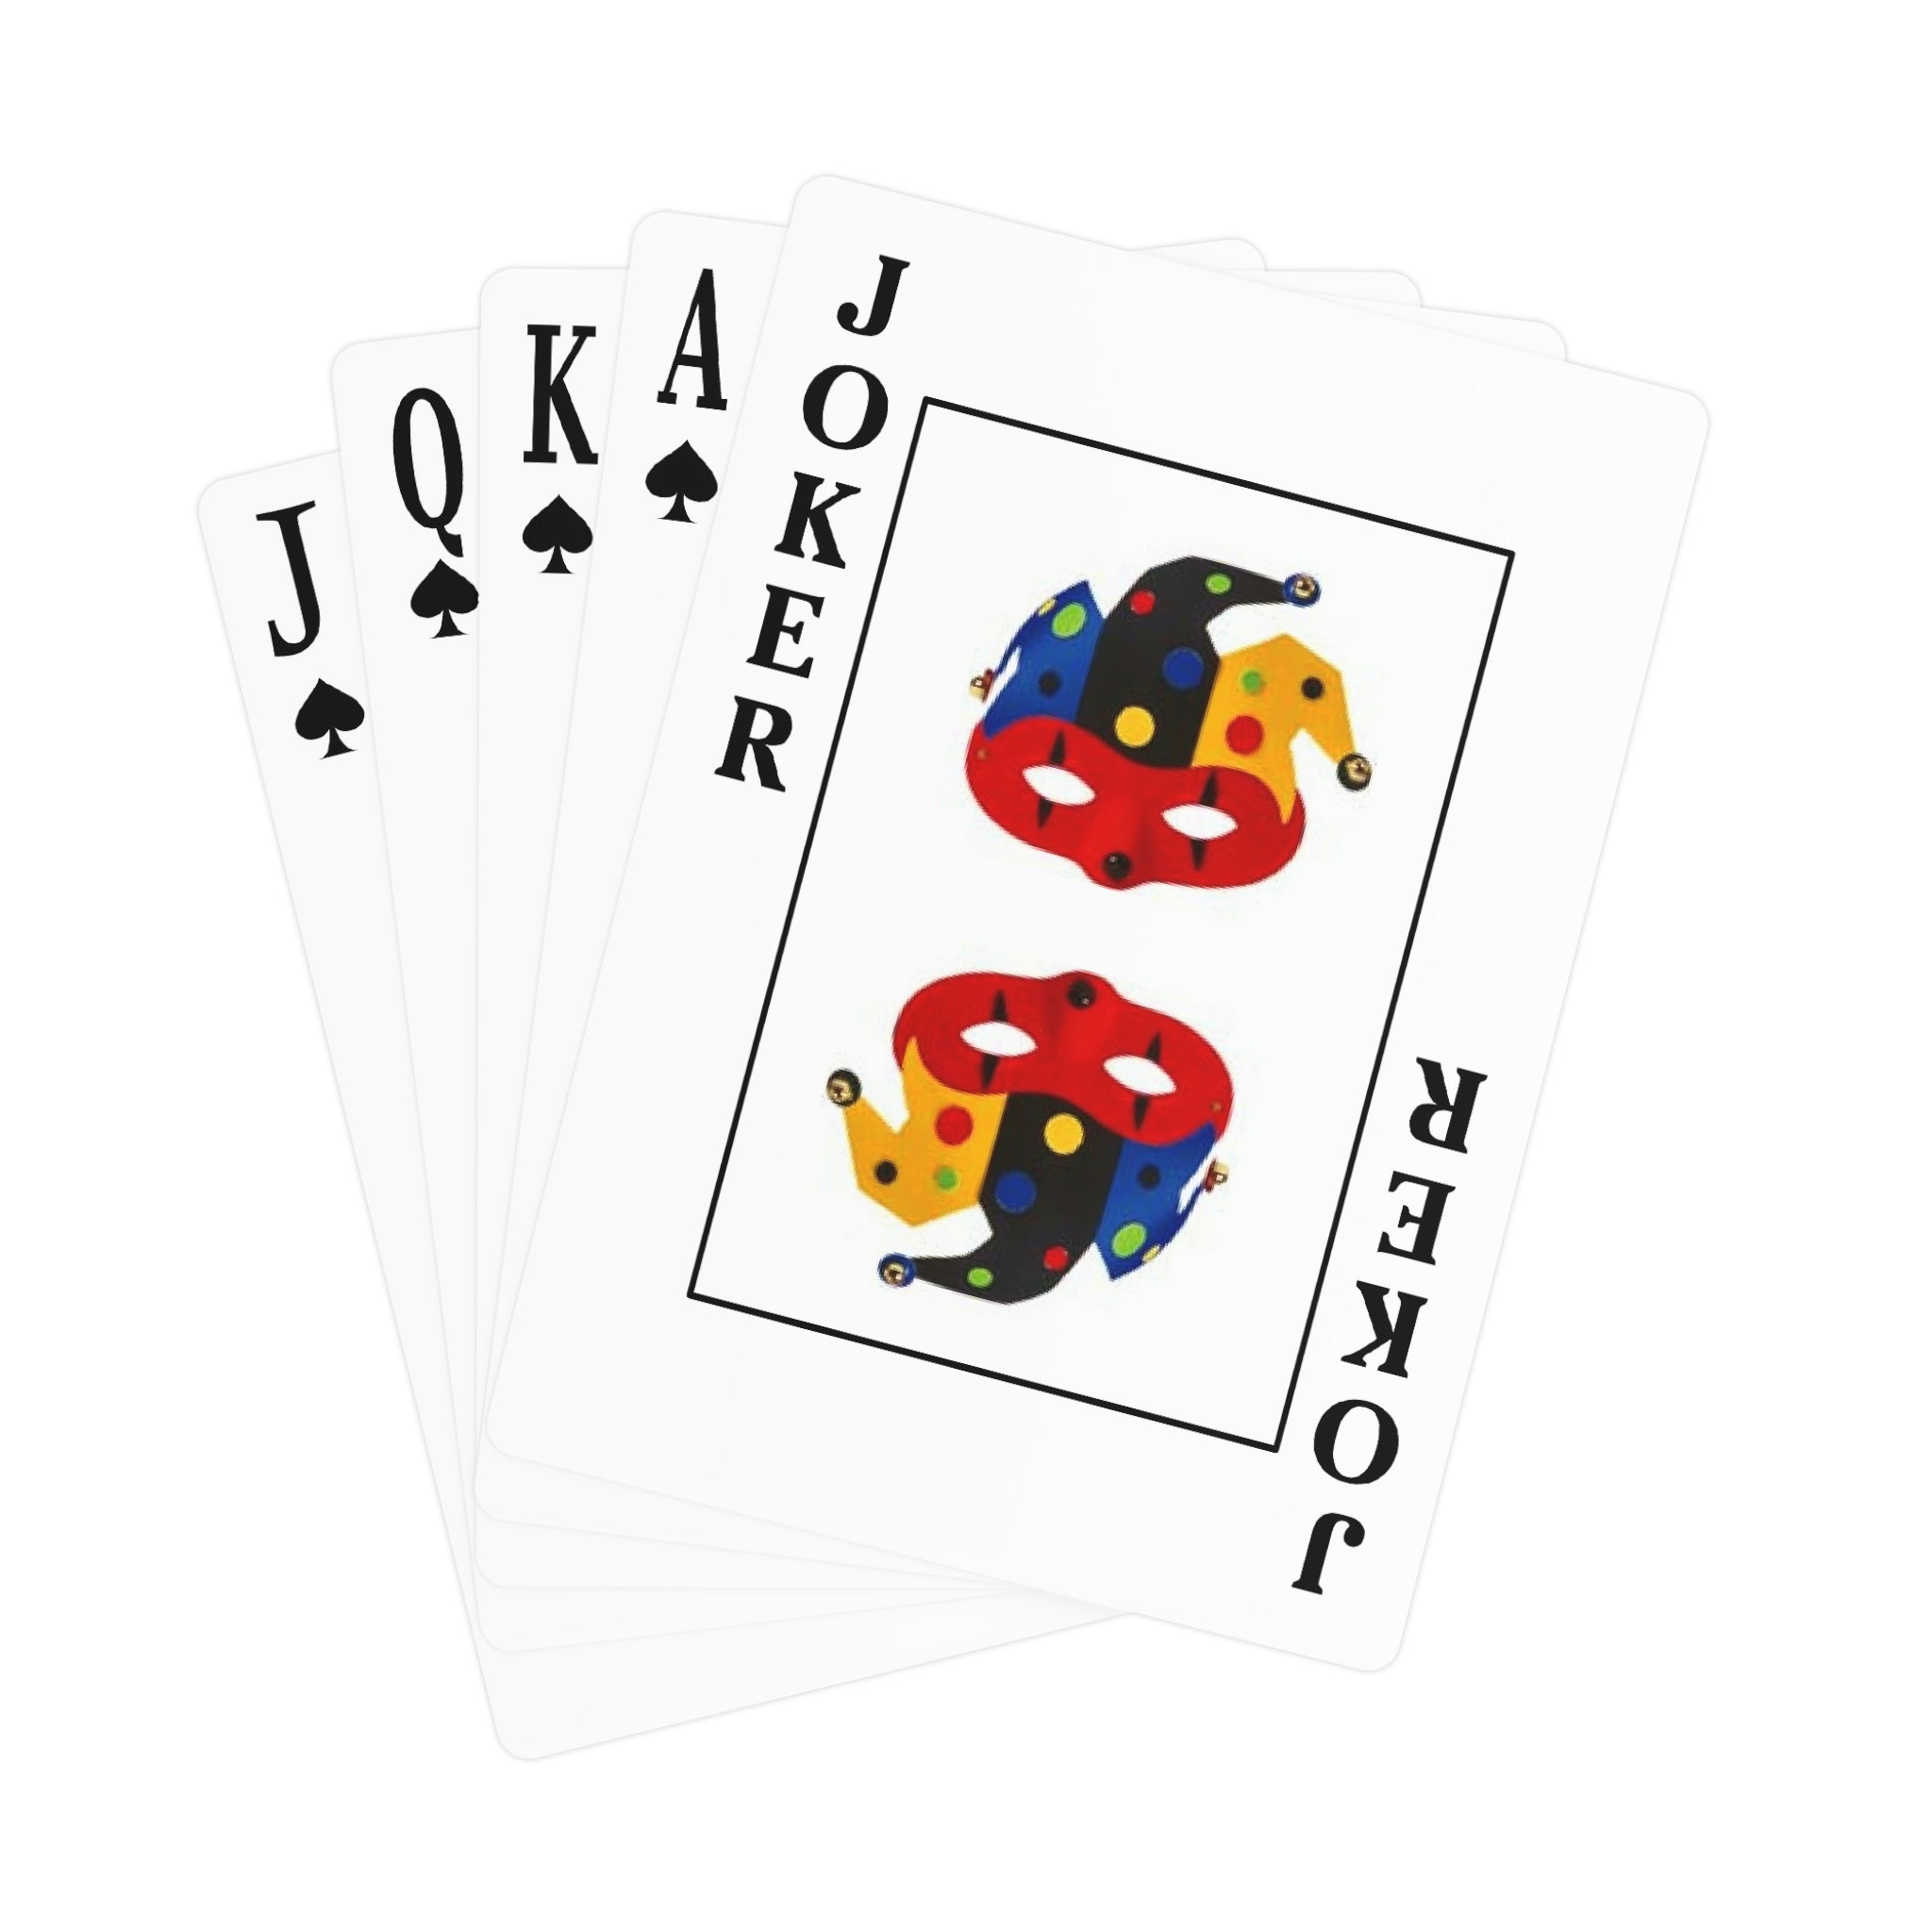 B.O.S.S. Farms Poker Card Set